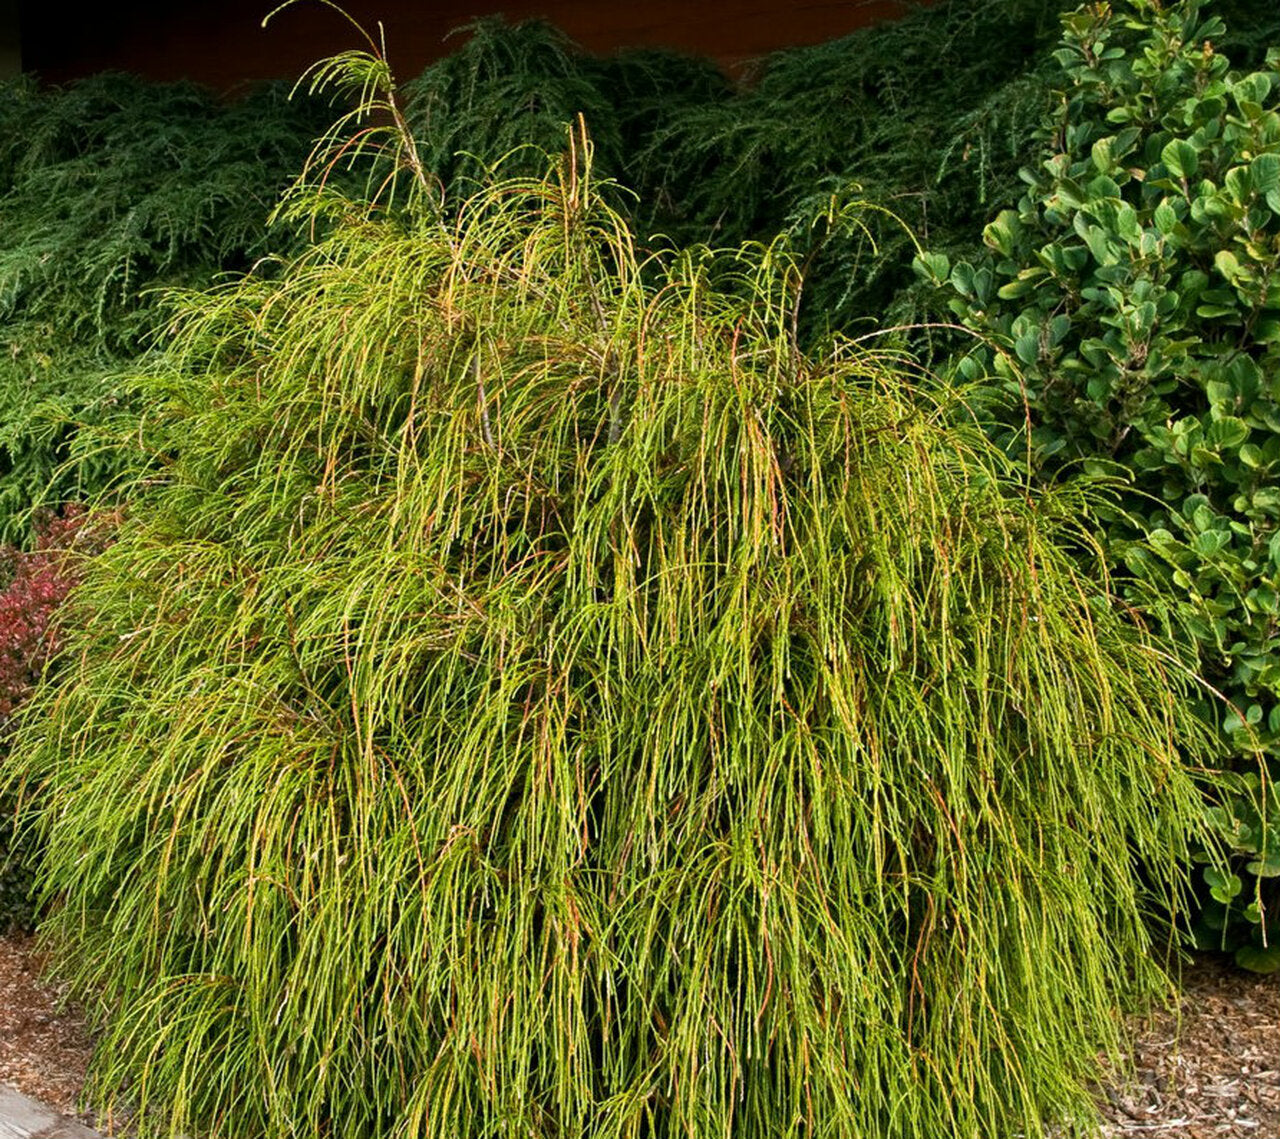 Whipcord Cedar (Thuja plicata 'Whipcord') - 1 Gallon Potted Tree